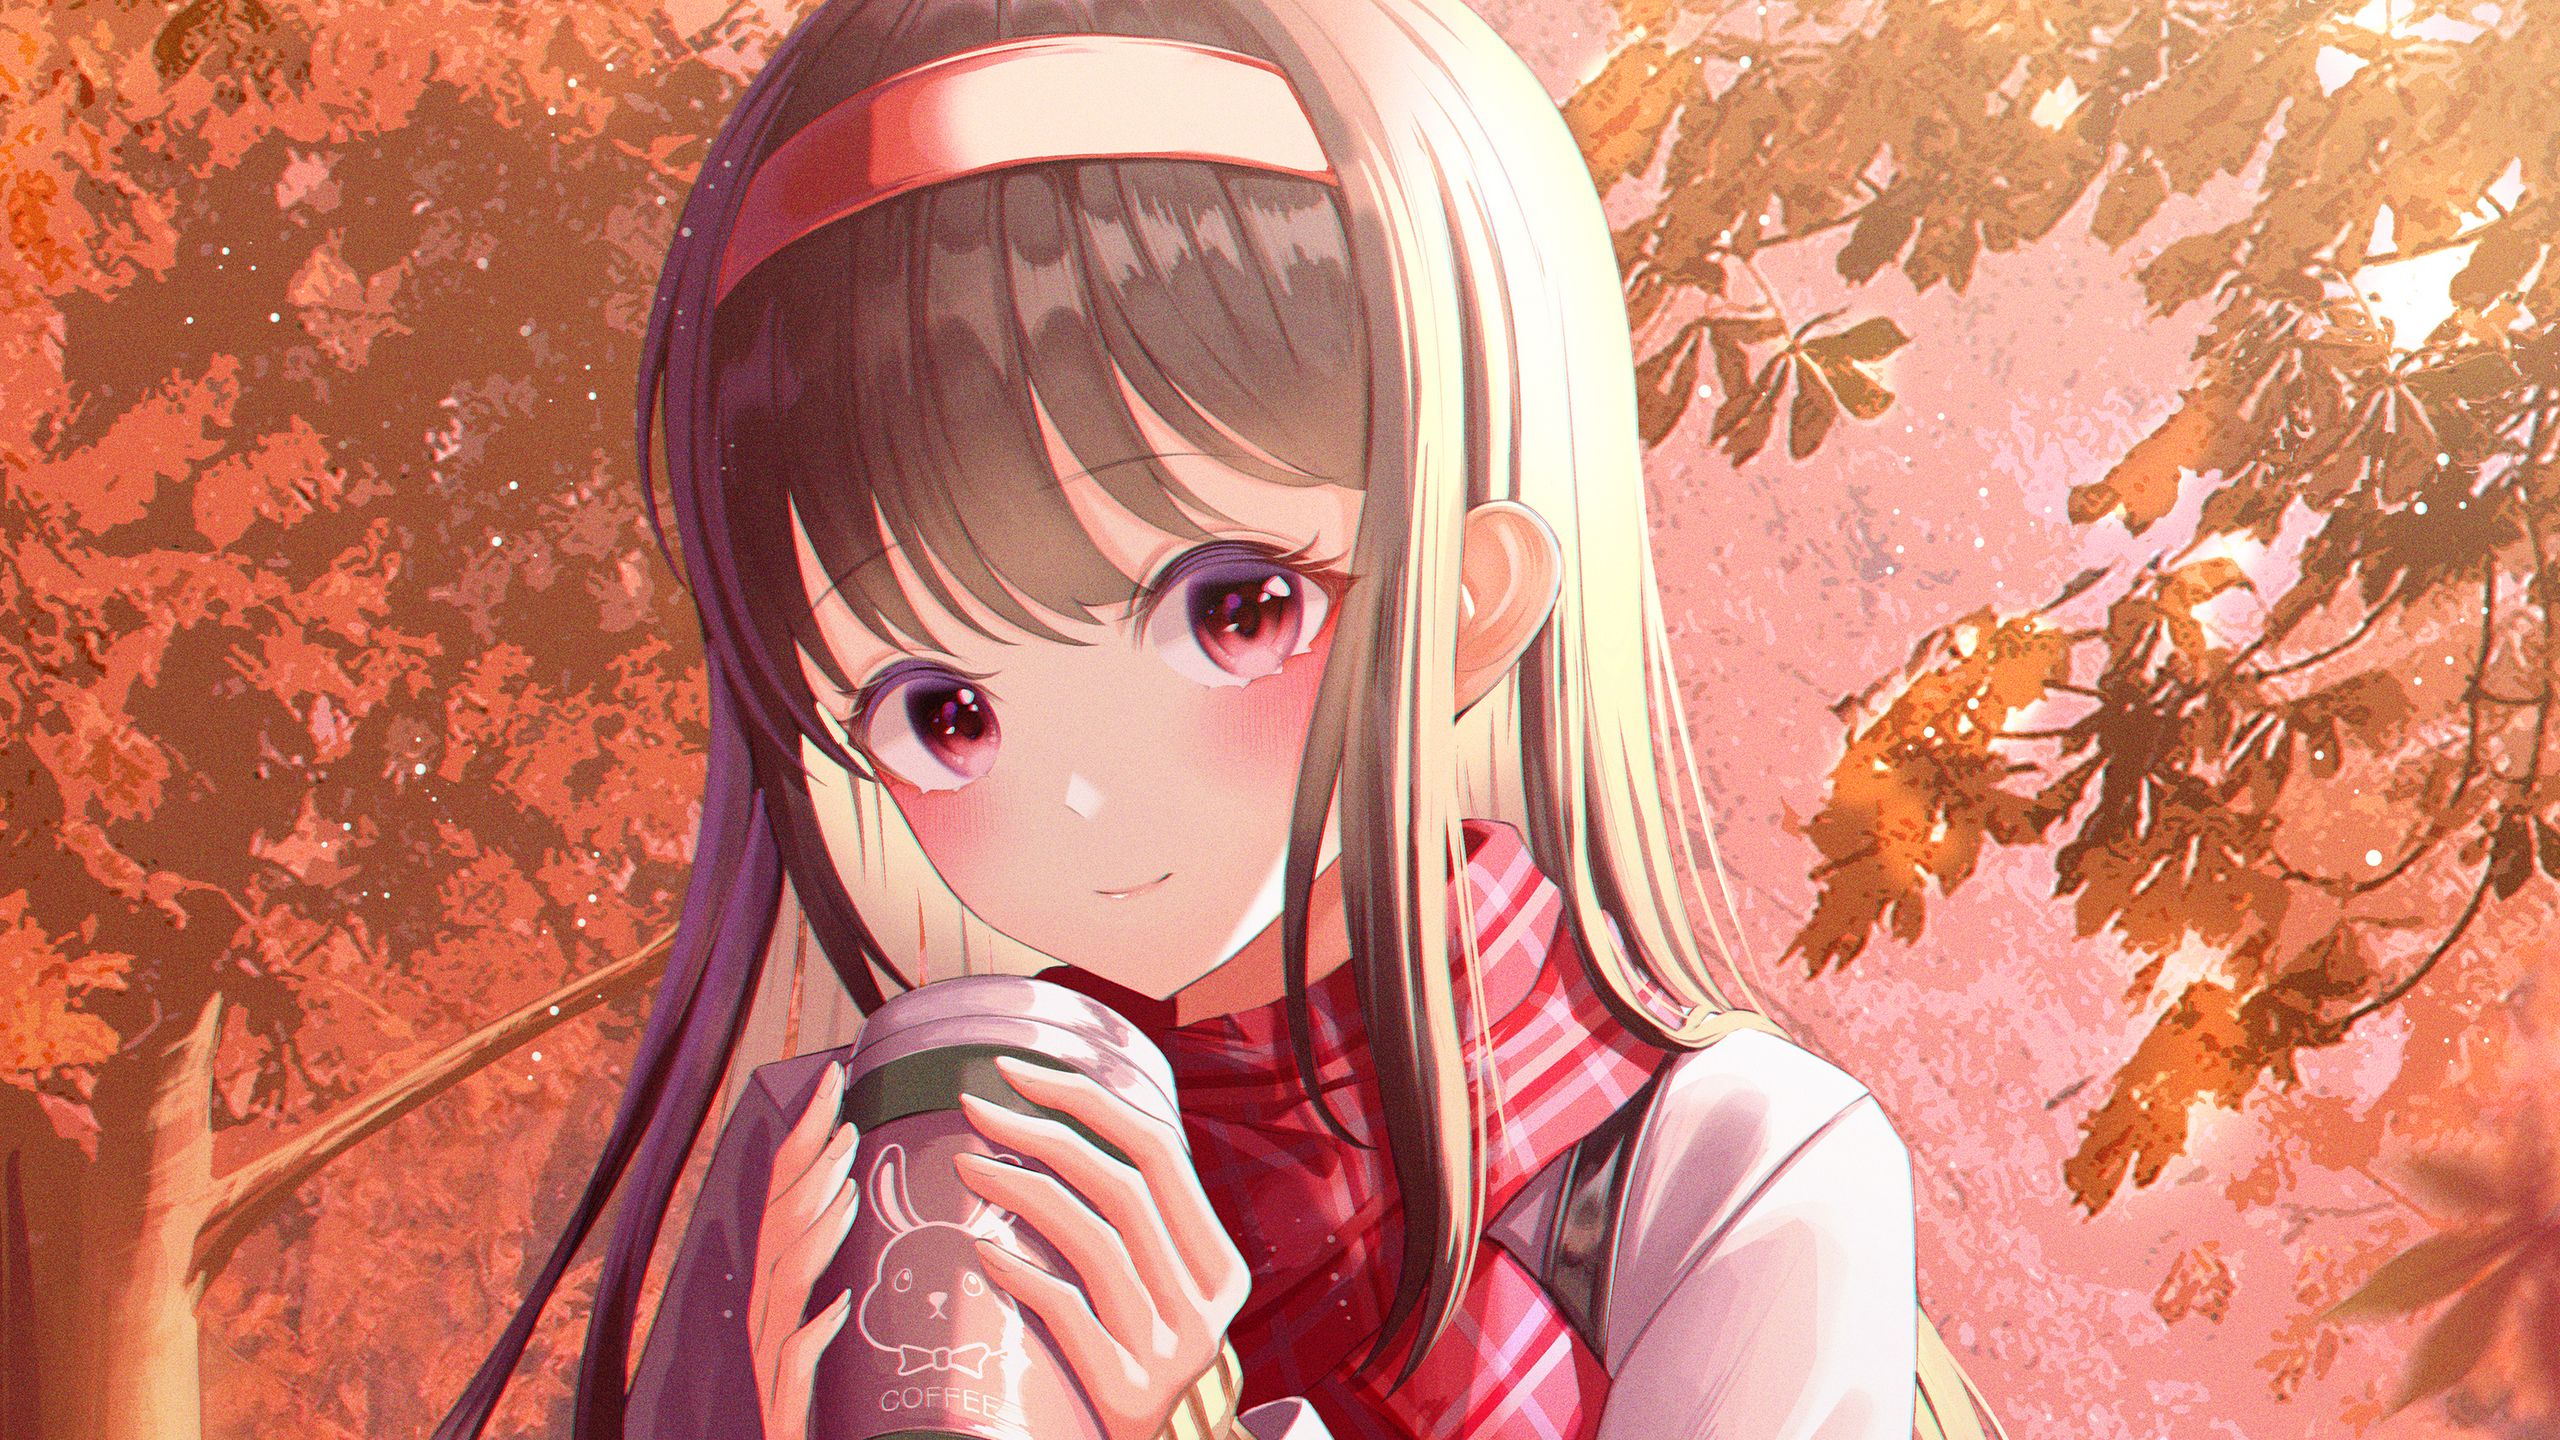 Download wallpaper 2560x1440 girl, coffee, autumn, anime, art widescreen 16:9 HD background